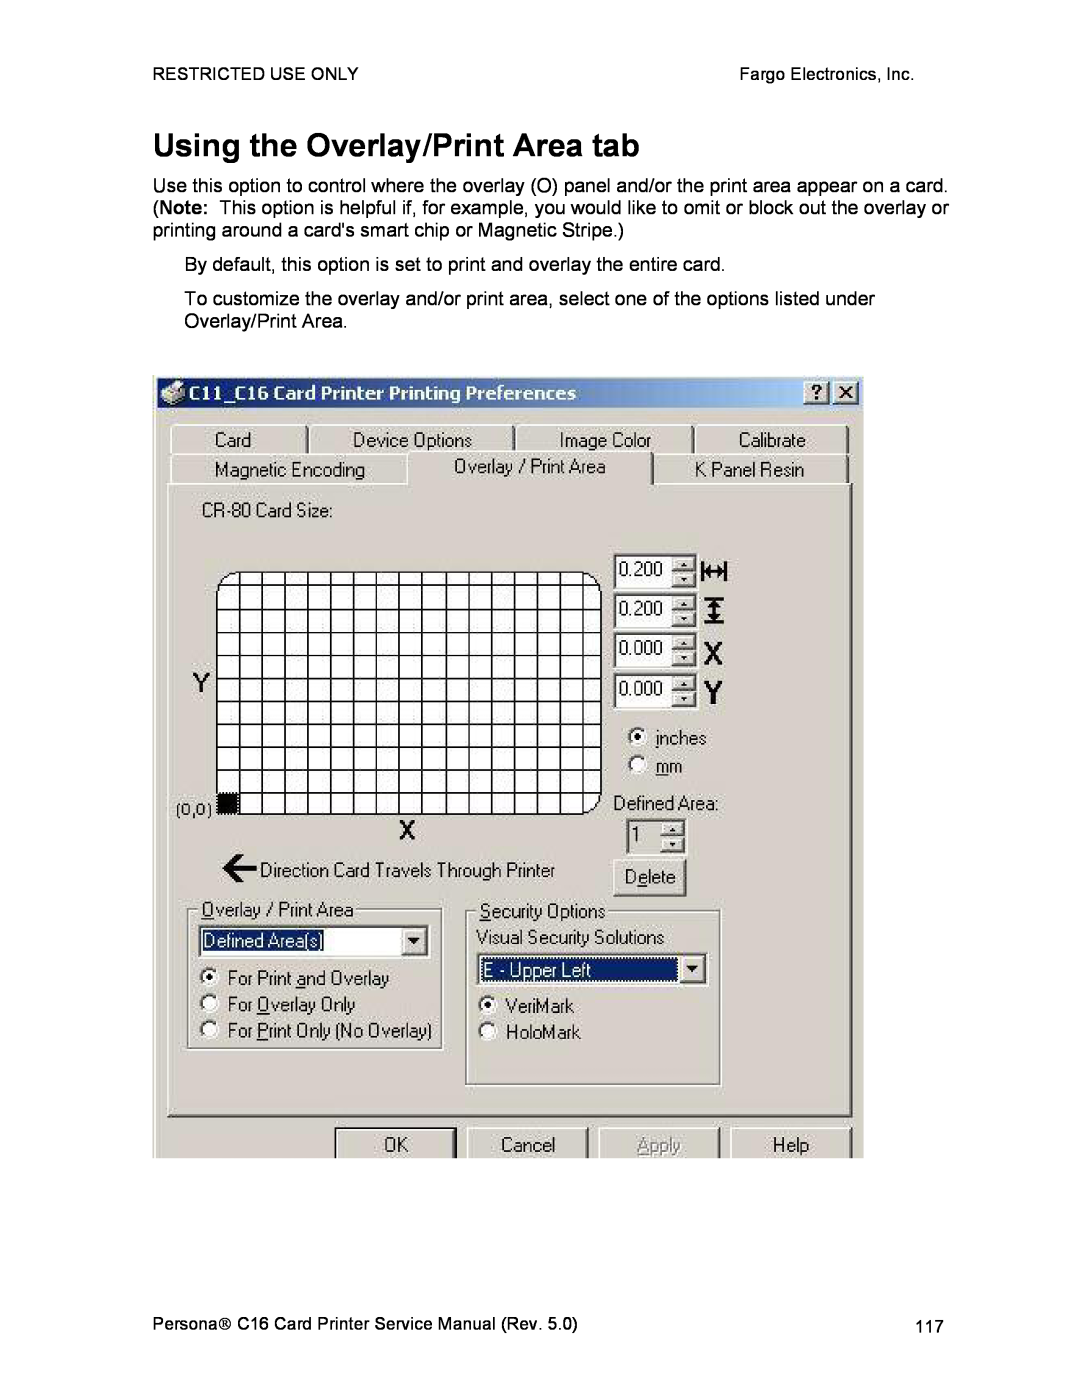 FARGO electronic C16 service manual Using the Overlay/Print Area tab 